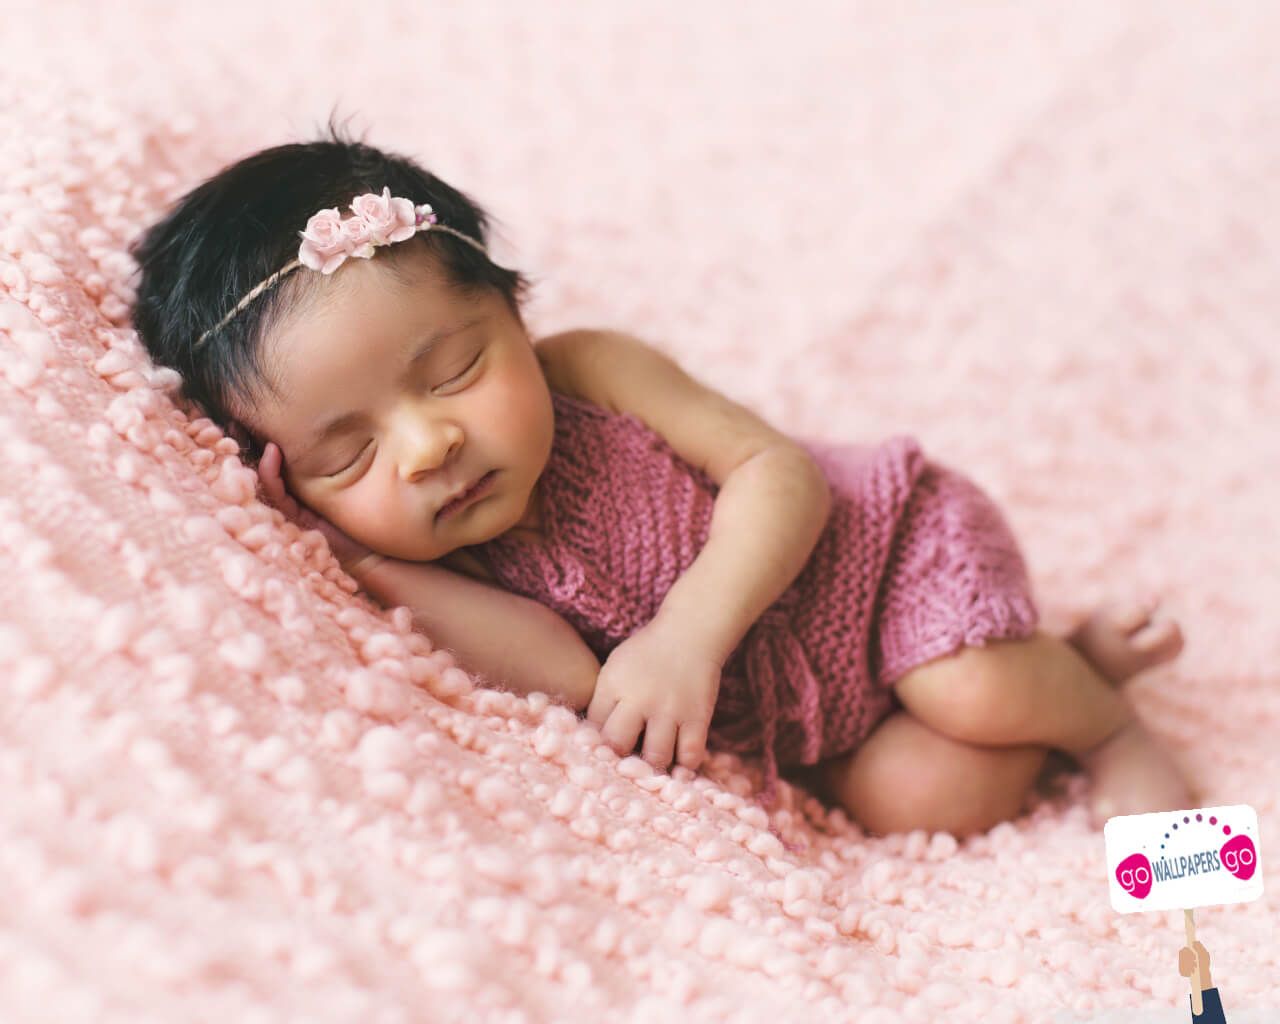 Tiny Newborn Baby Girl. Go Wallpaper Go